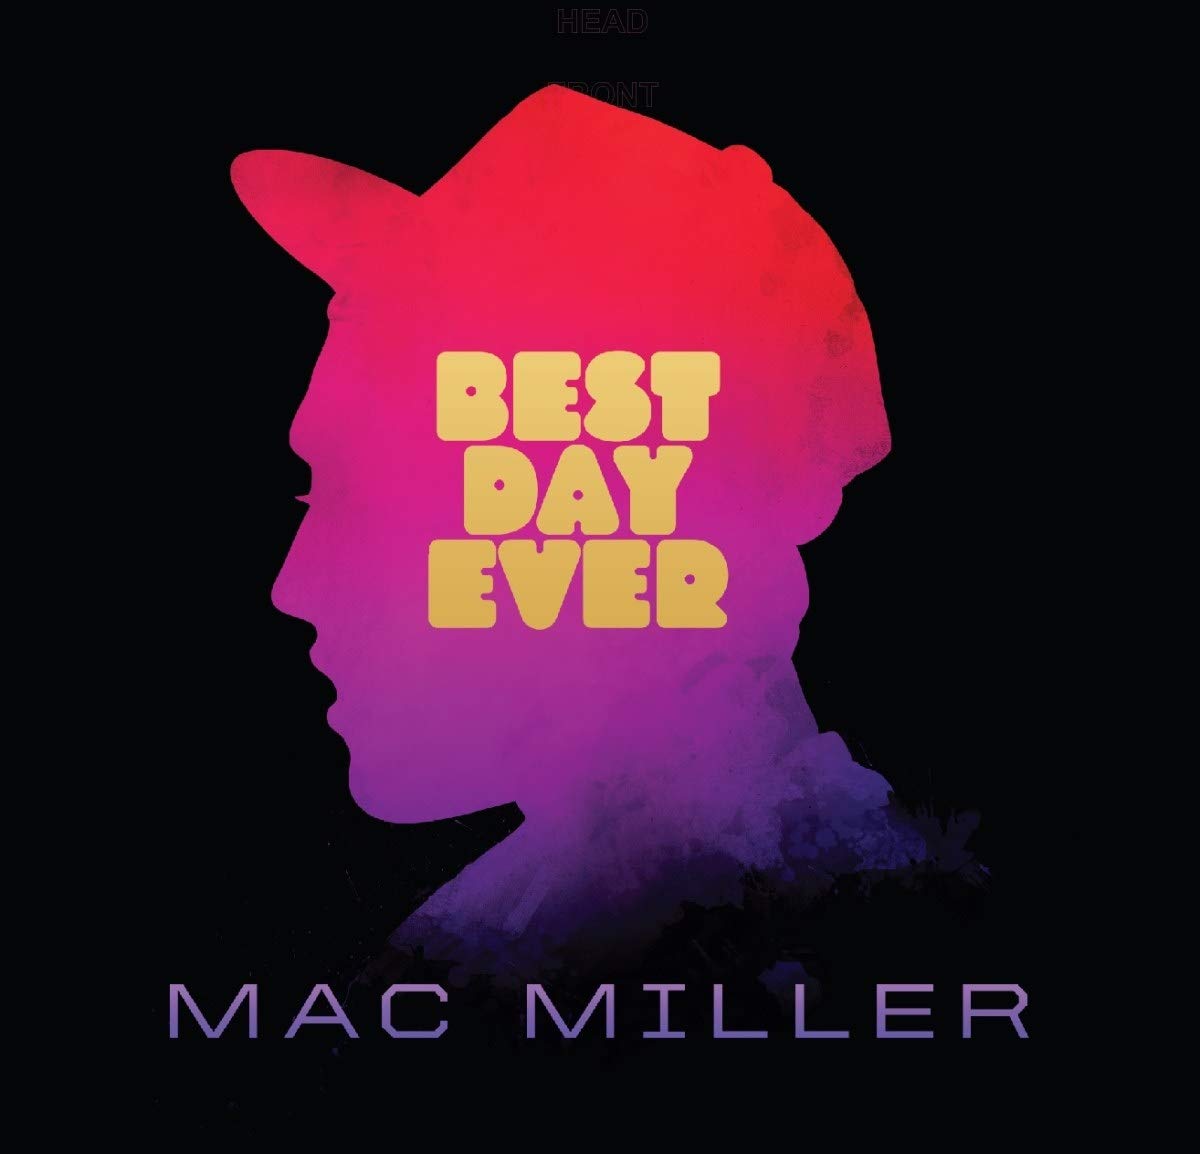 Mac miller the spins mp3 downloads